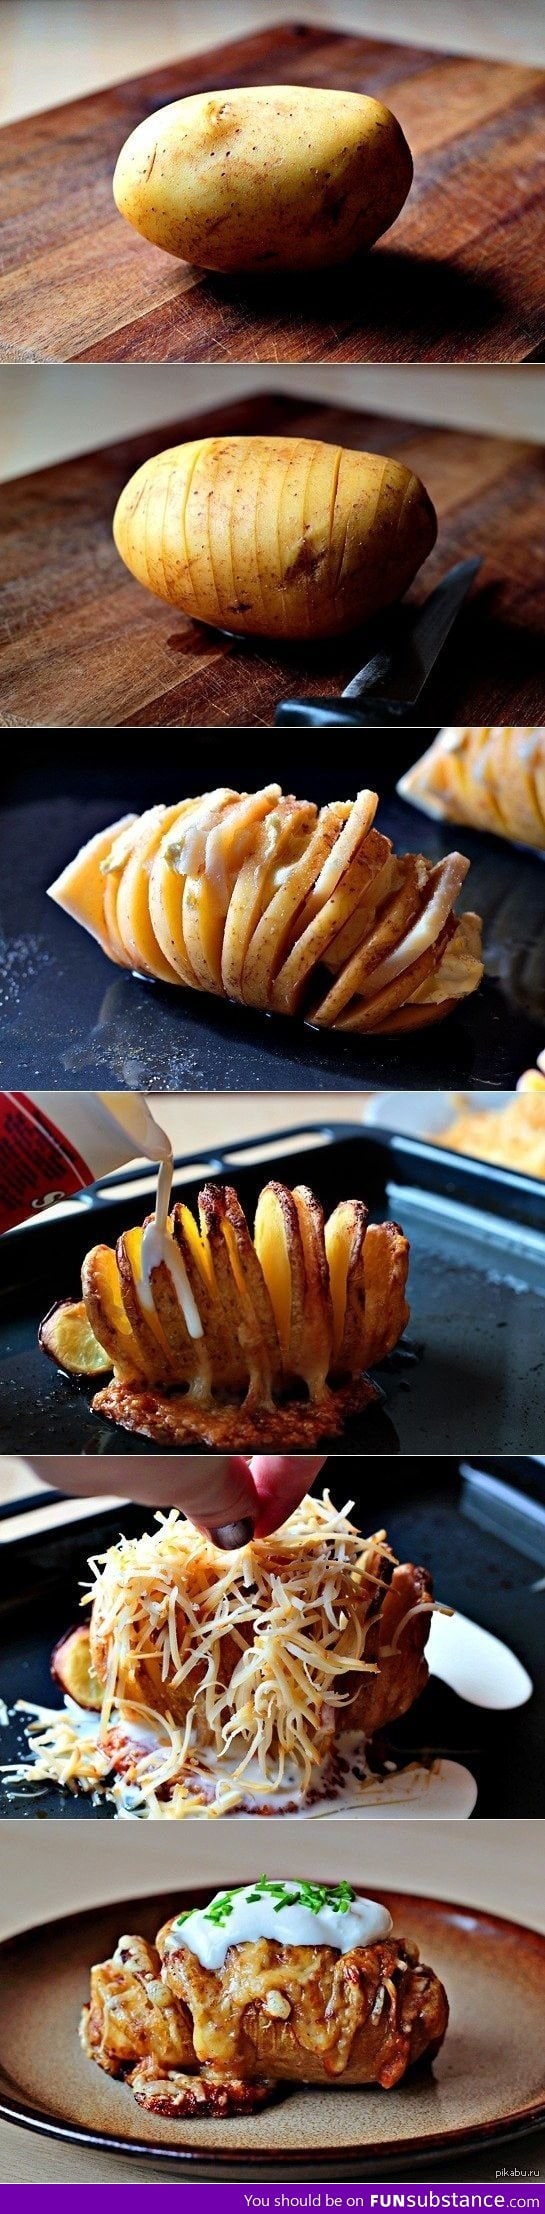 The perfect baked potato